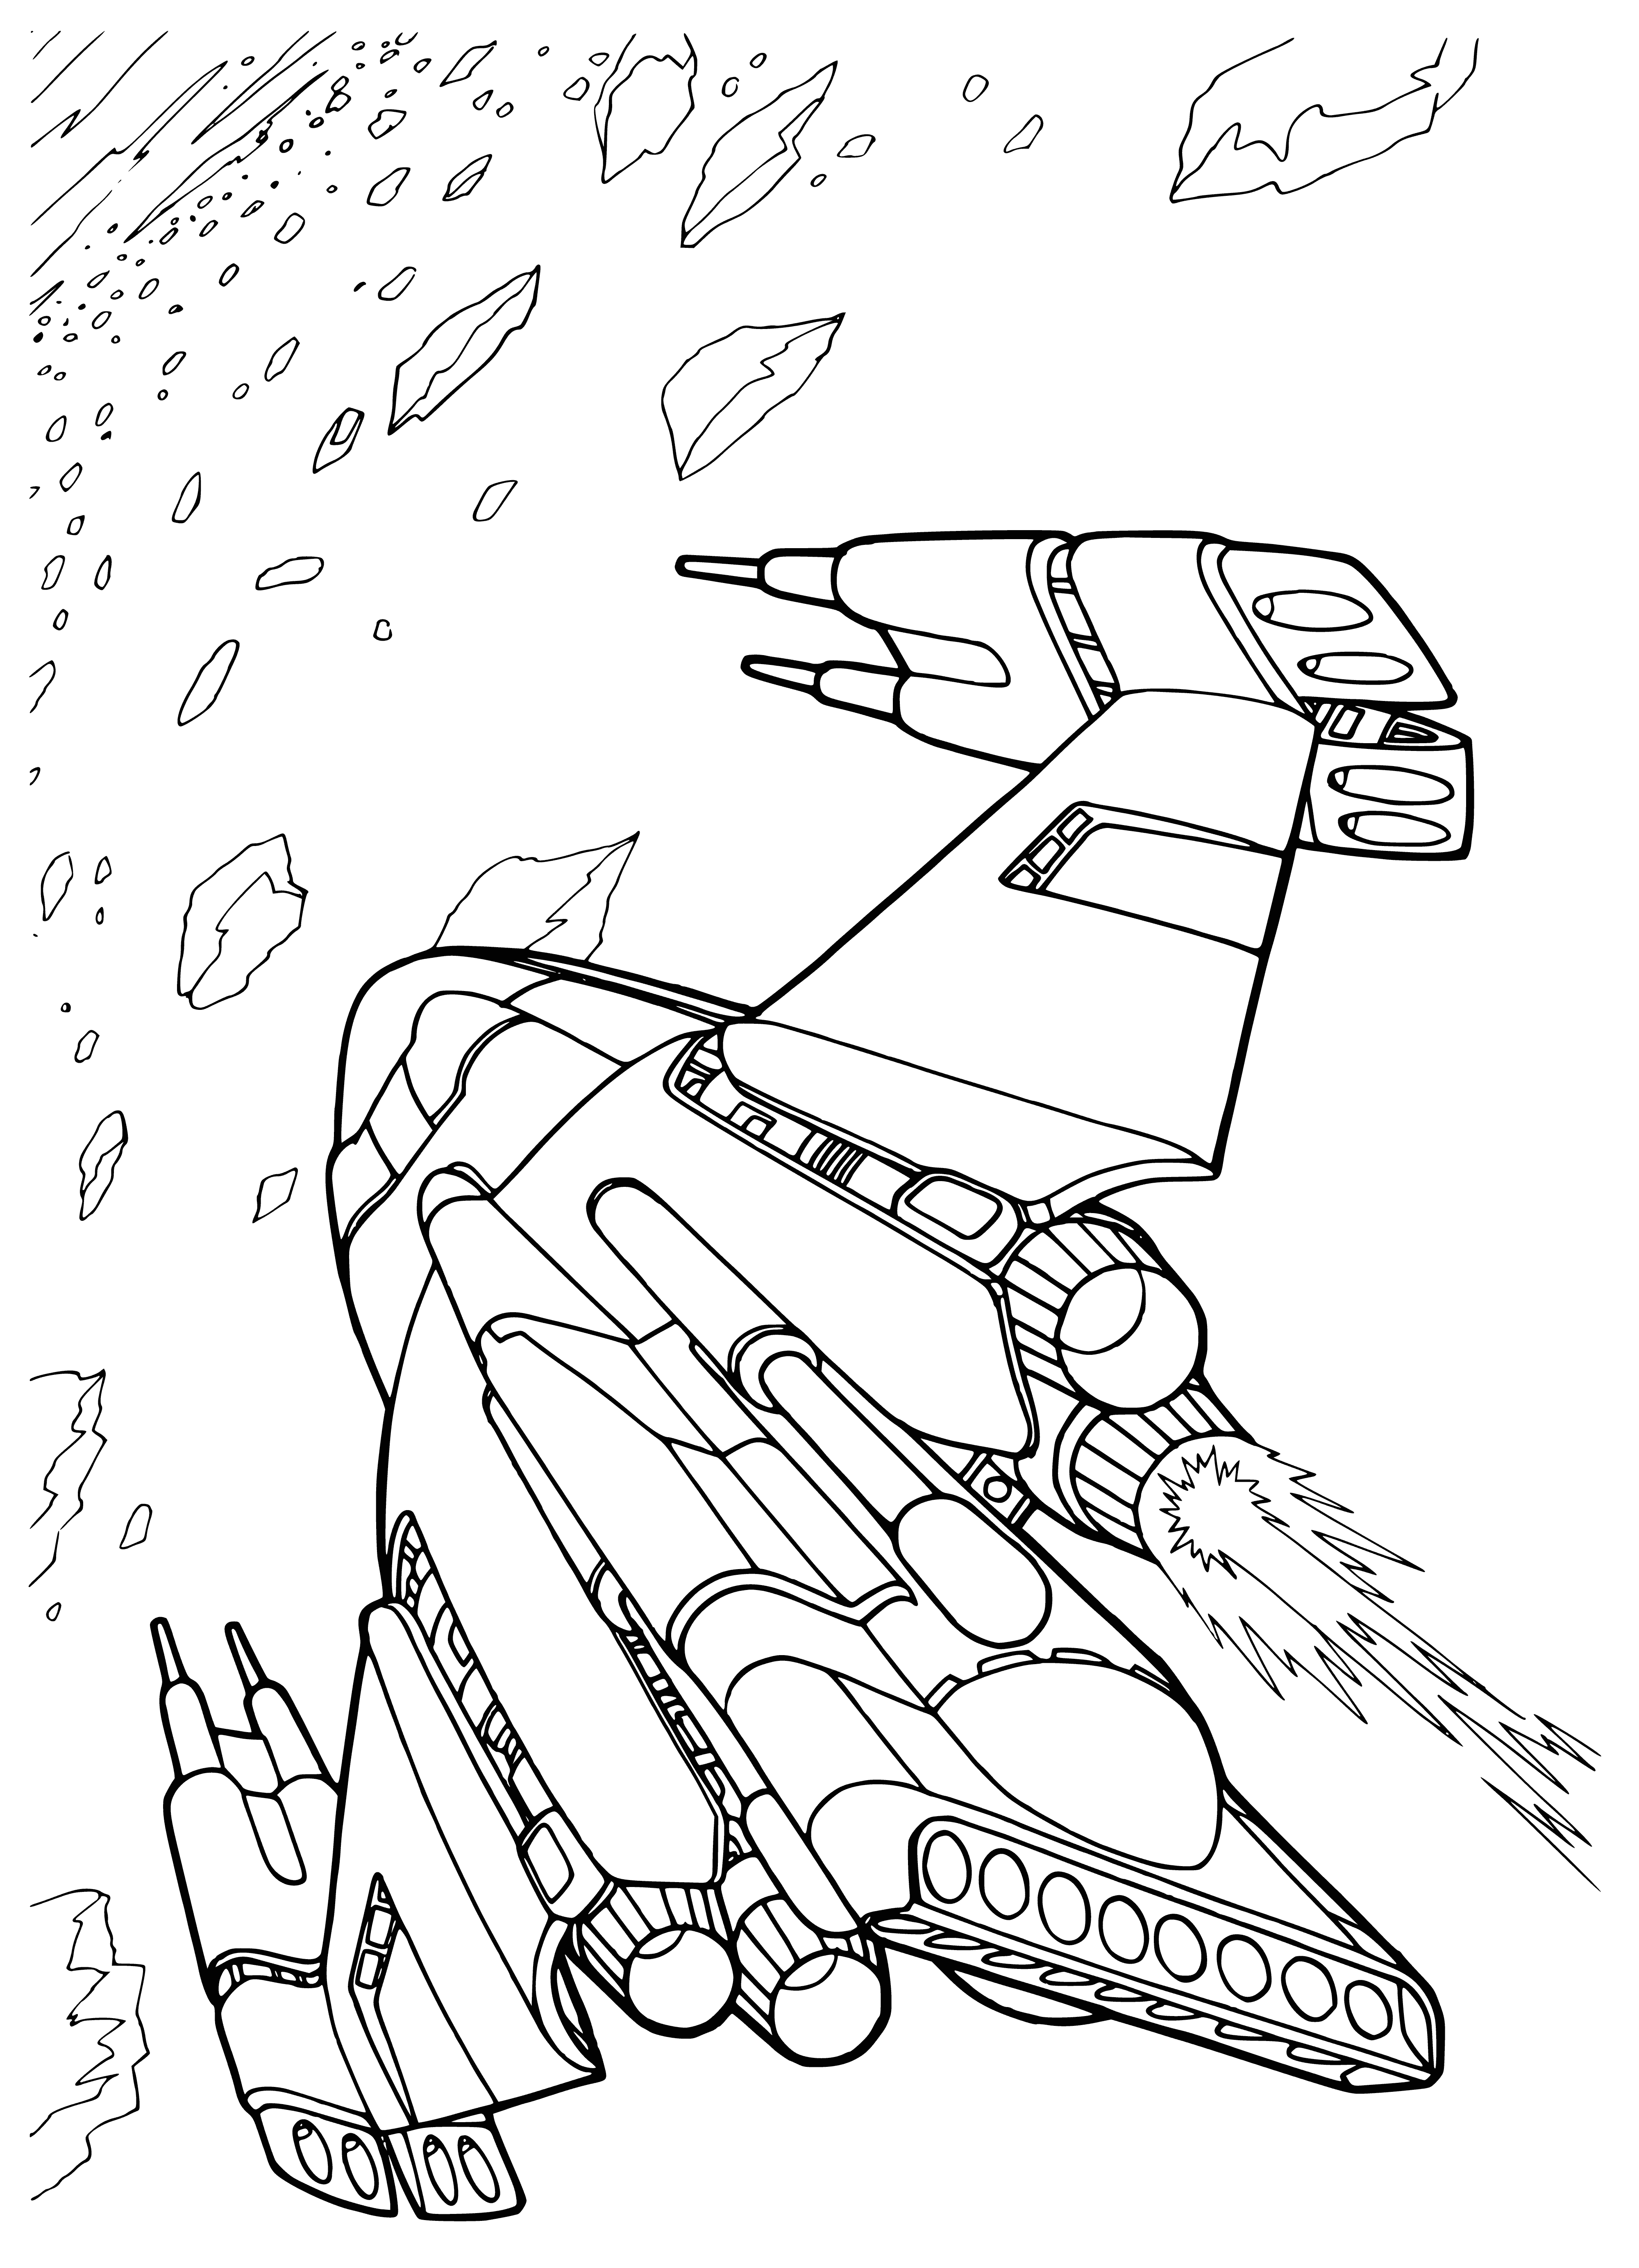 Battle ship coloring page